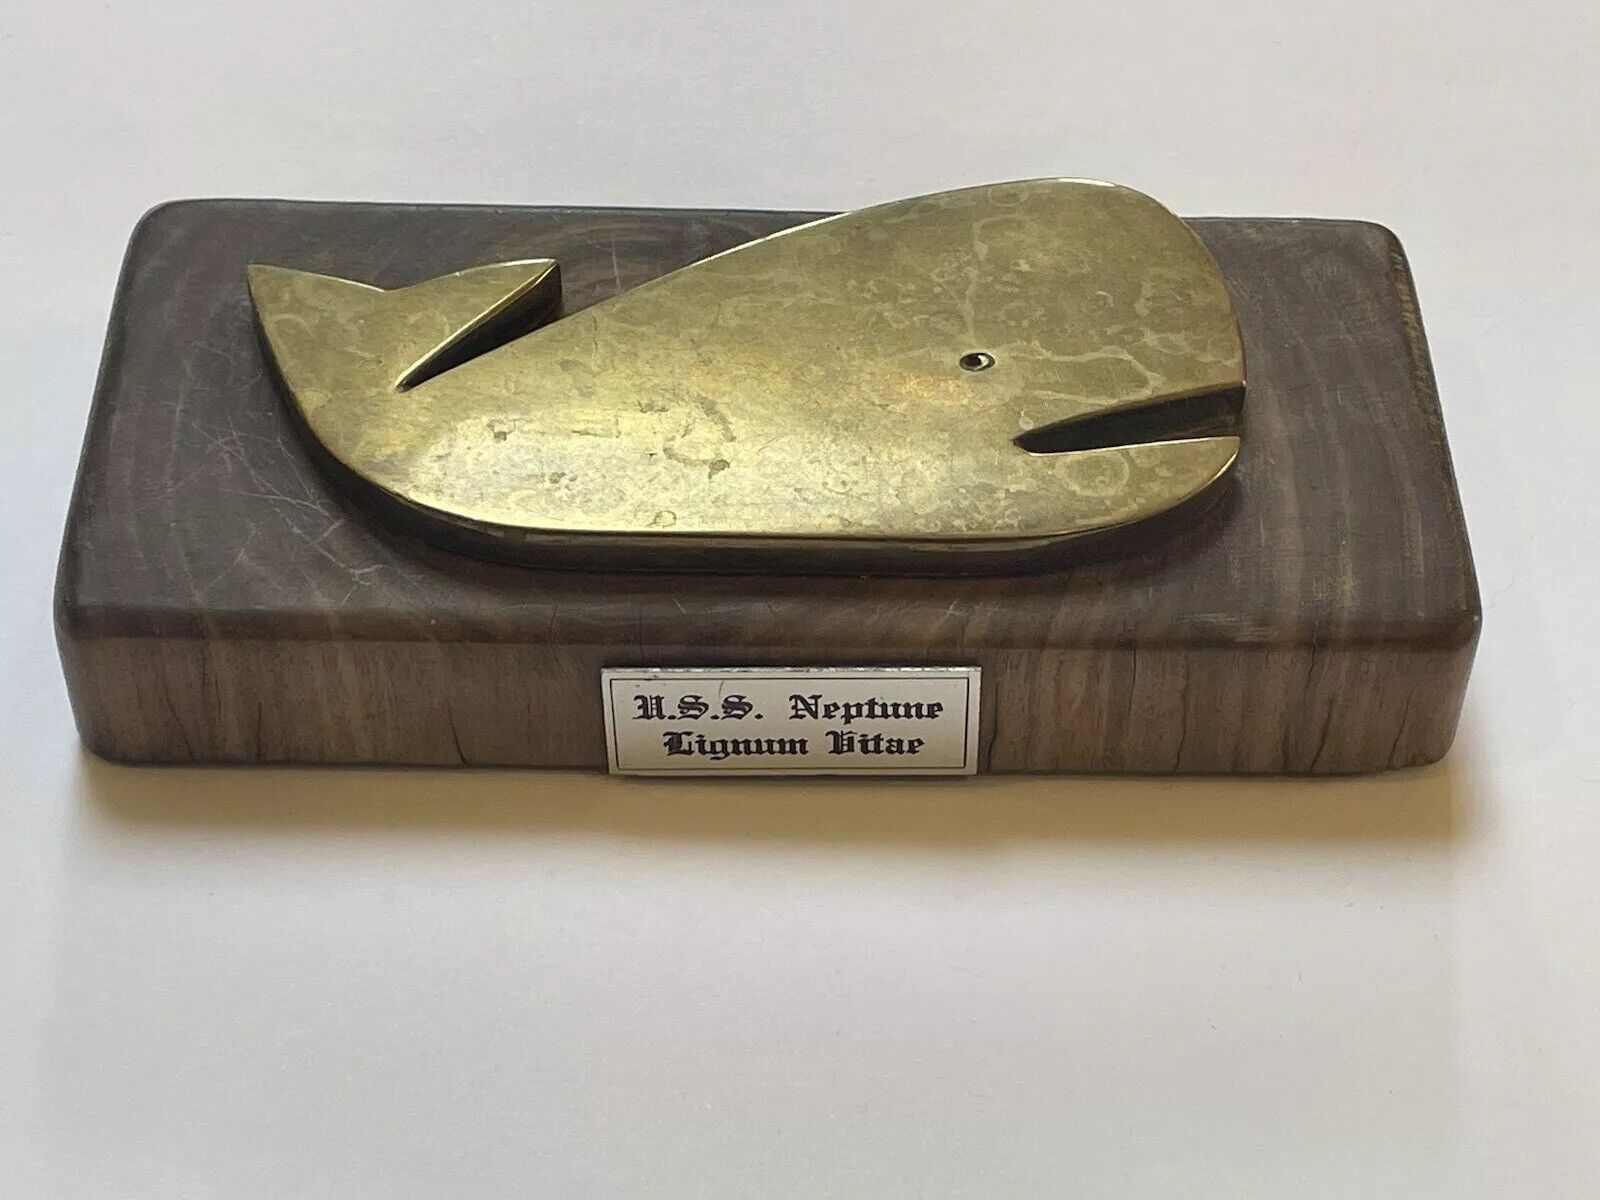 “USS Neptune Lignum Vitae” Wood Block W/ Brass Whale Commemorative Item See Note